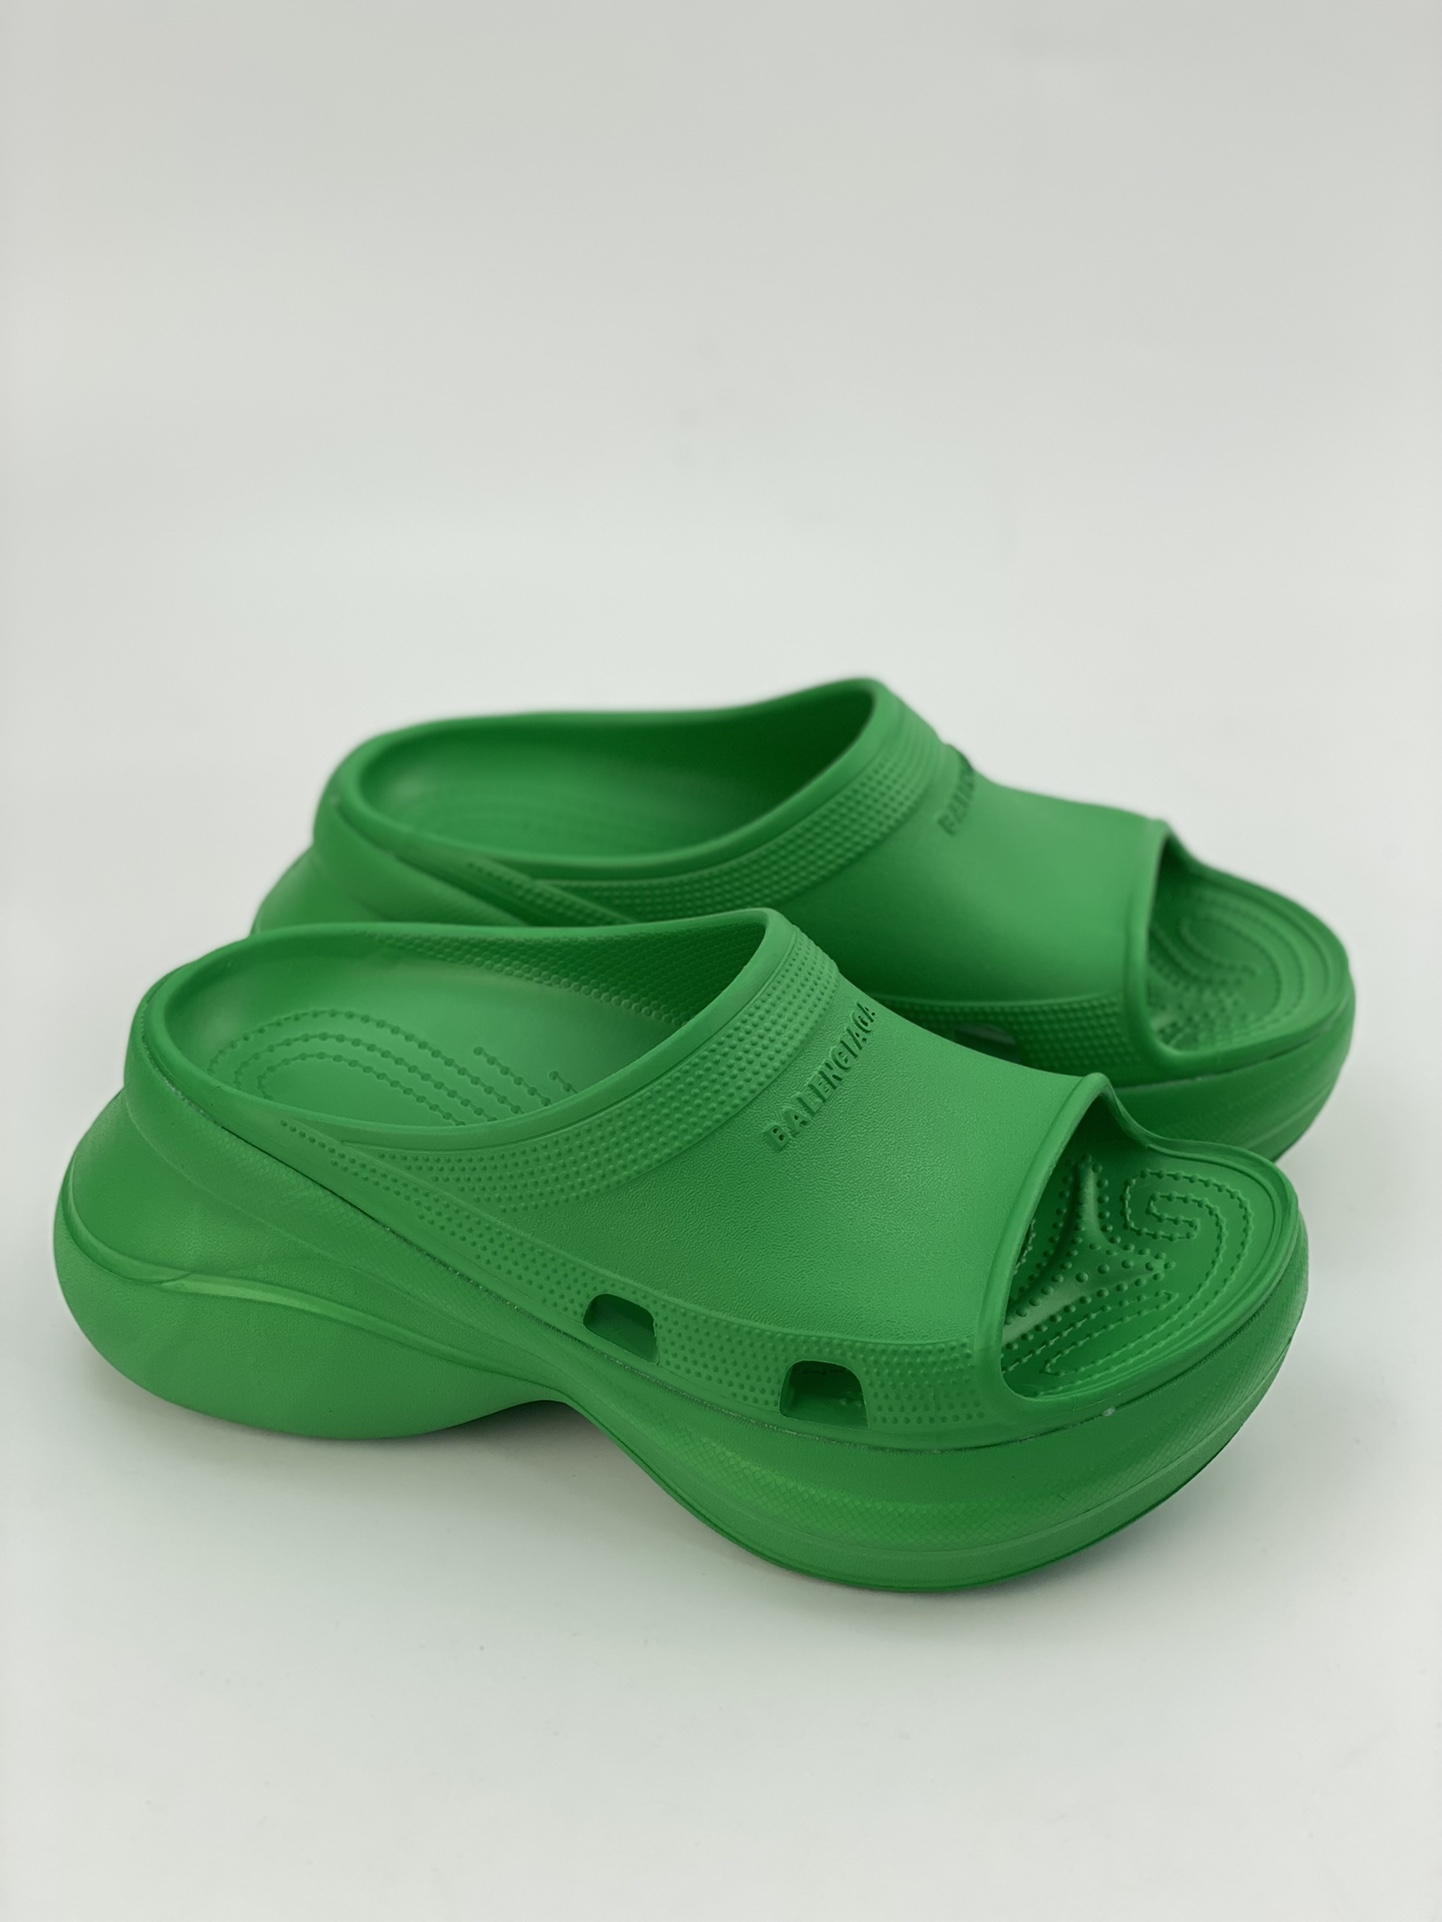 Balenciaga x Crocs Pool Platform Slide Sandals Muller series platform thick-soled slipper sandals